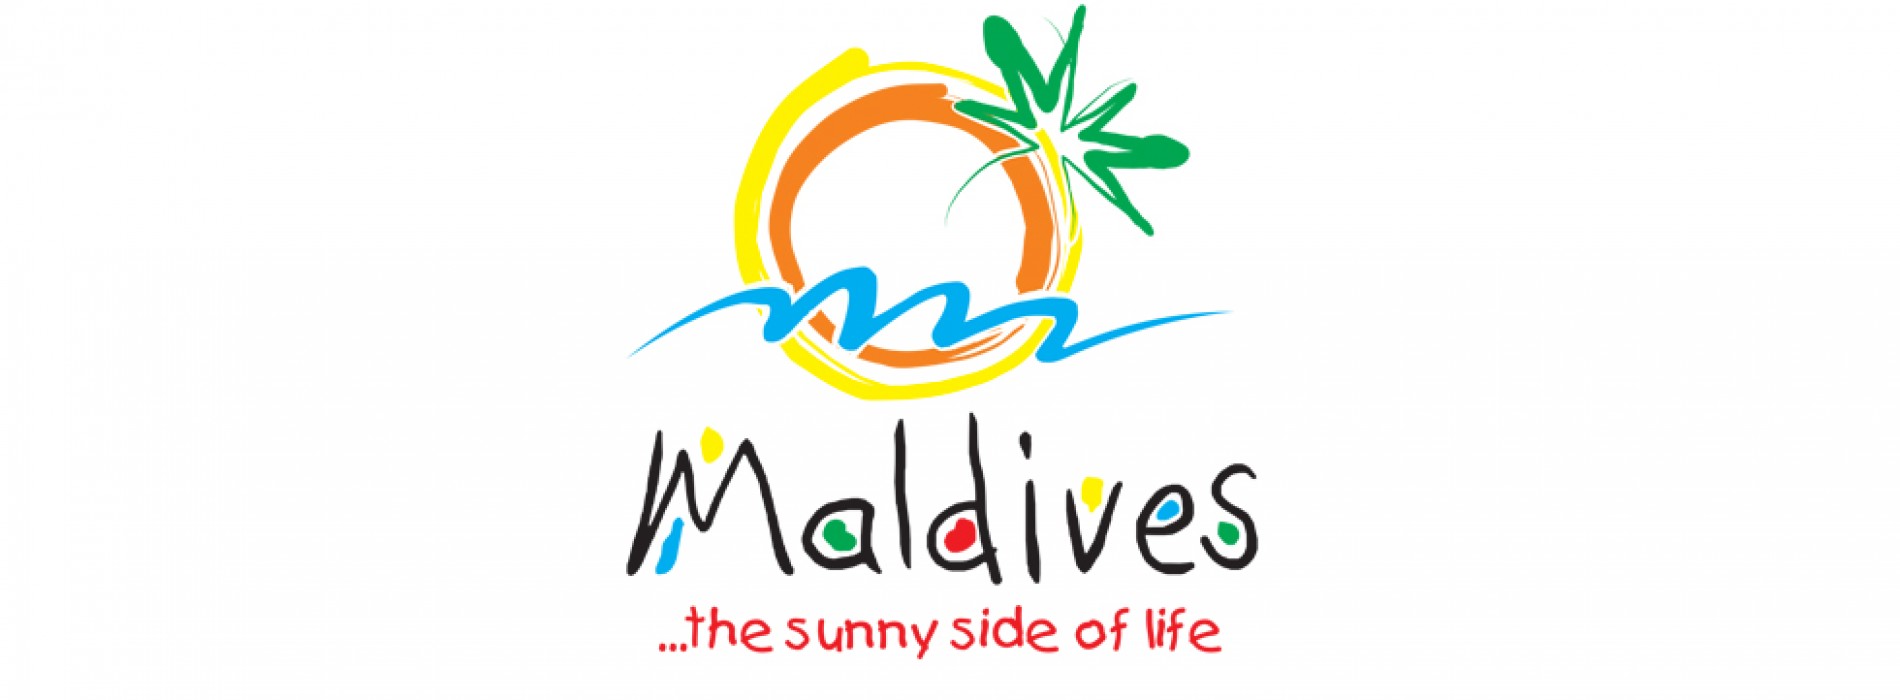 MMPRC launches a brand new “VisitMaldives” website